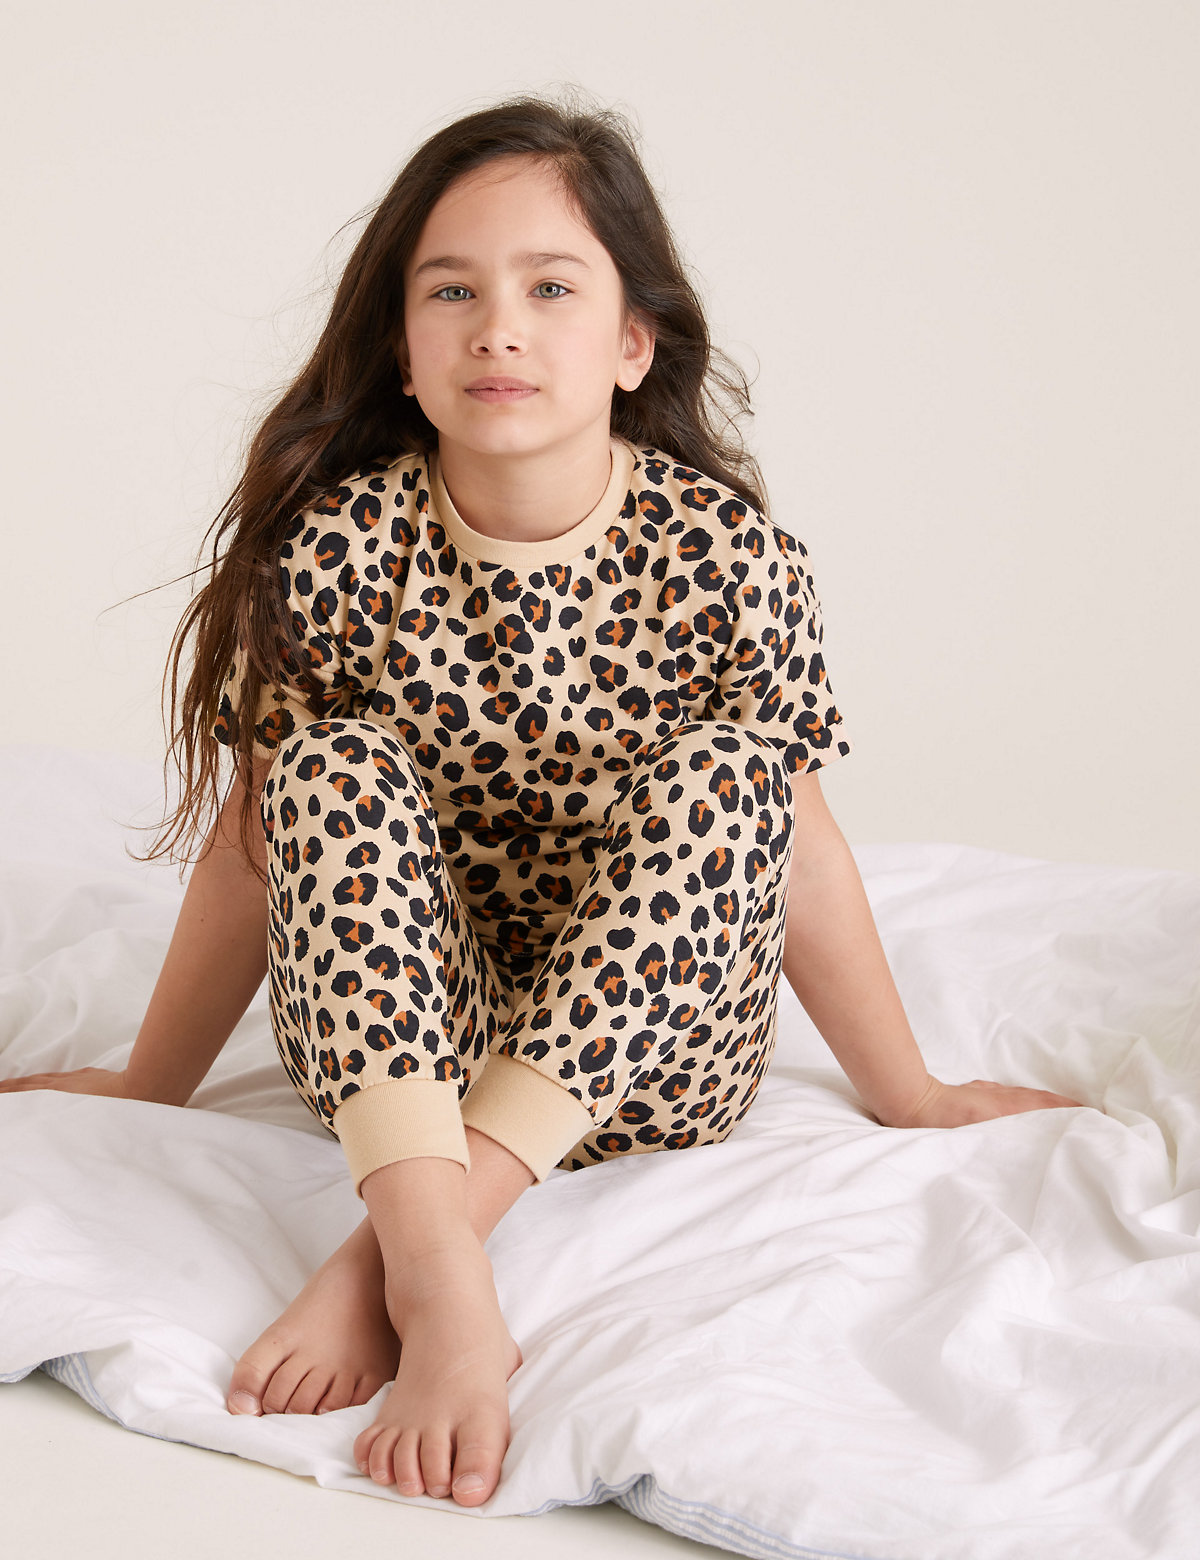 Pure Cotton Leopard Print Pyjamas